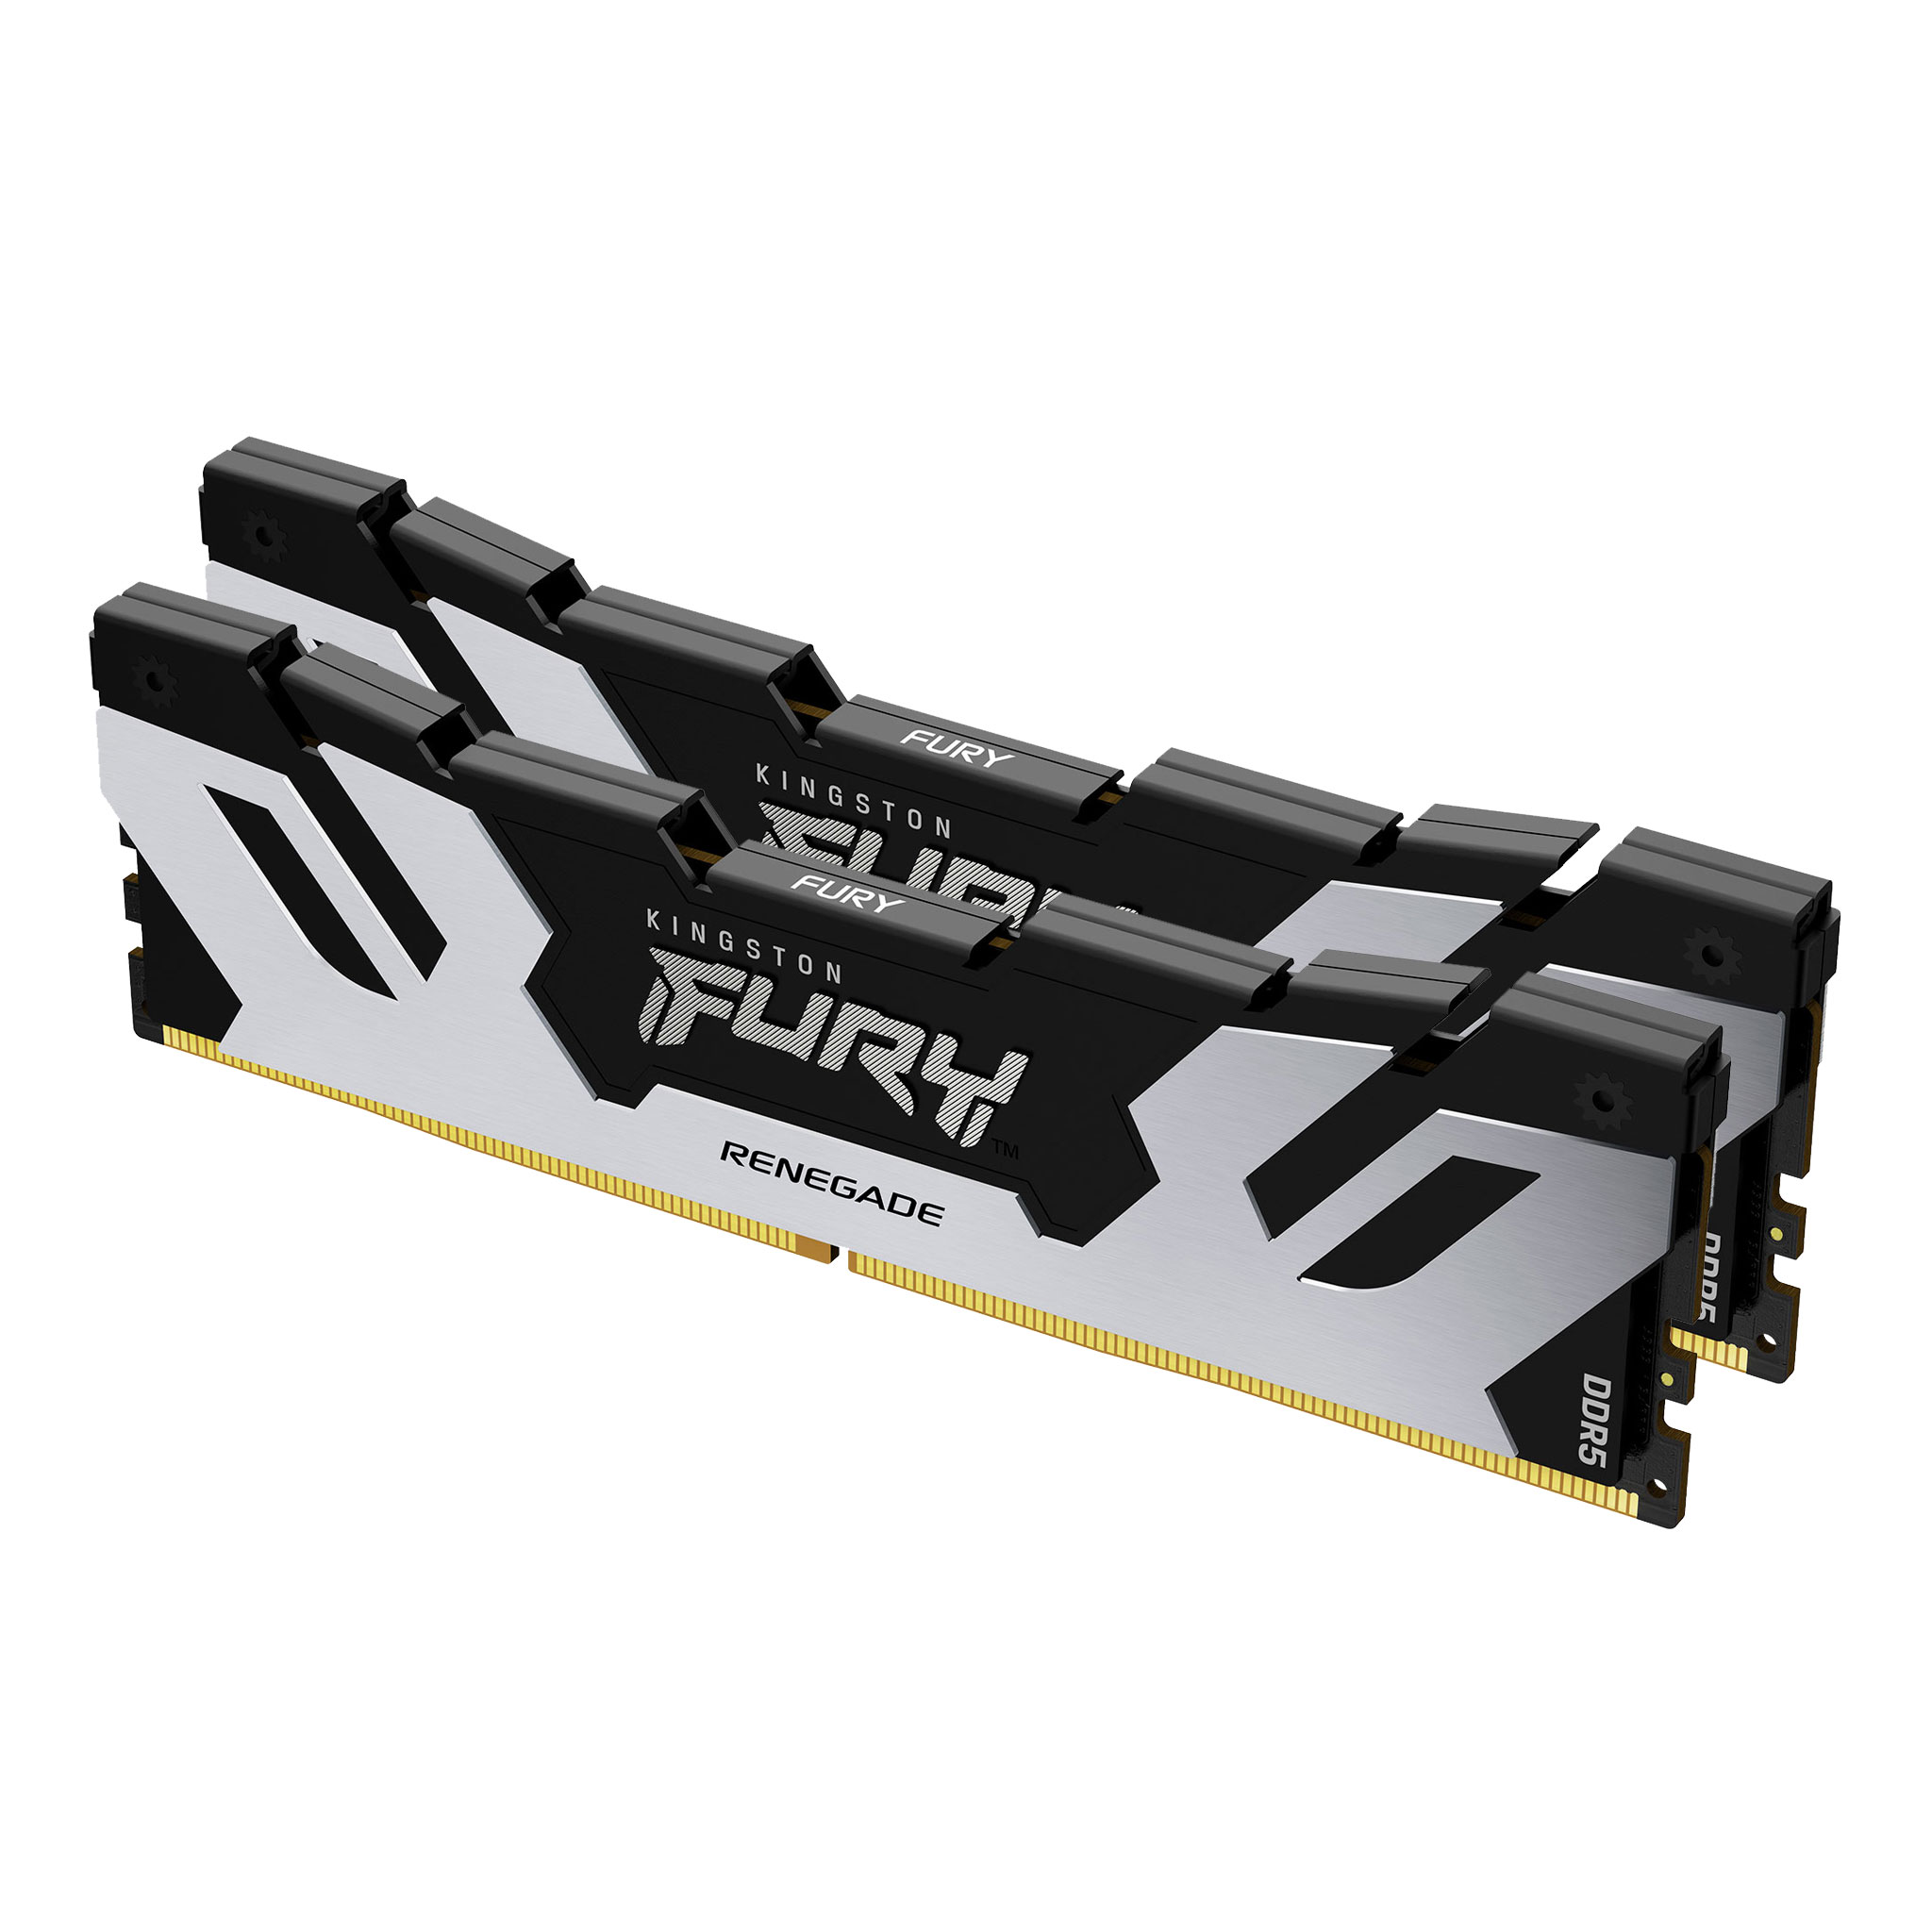 Kingston FURY™ Renegade Pro DDR5 RDIMM Memory  High-Speed Workflow and  Gaming – Kingston Technology